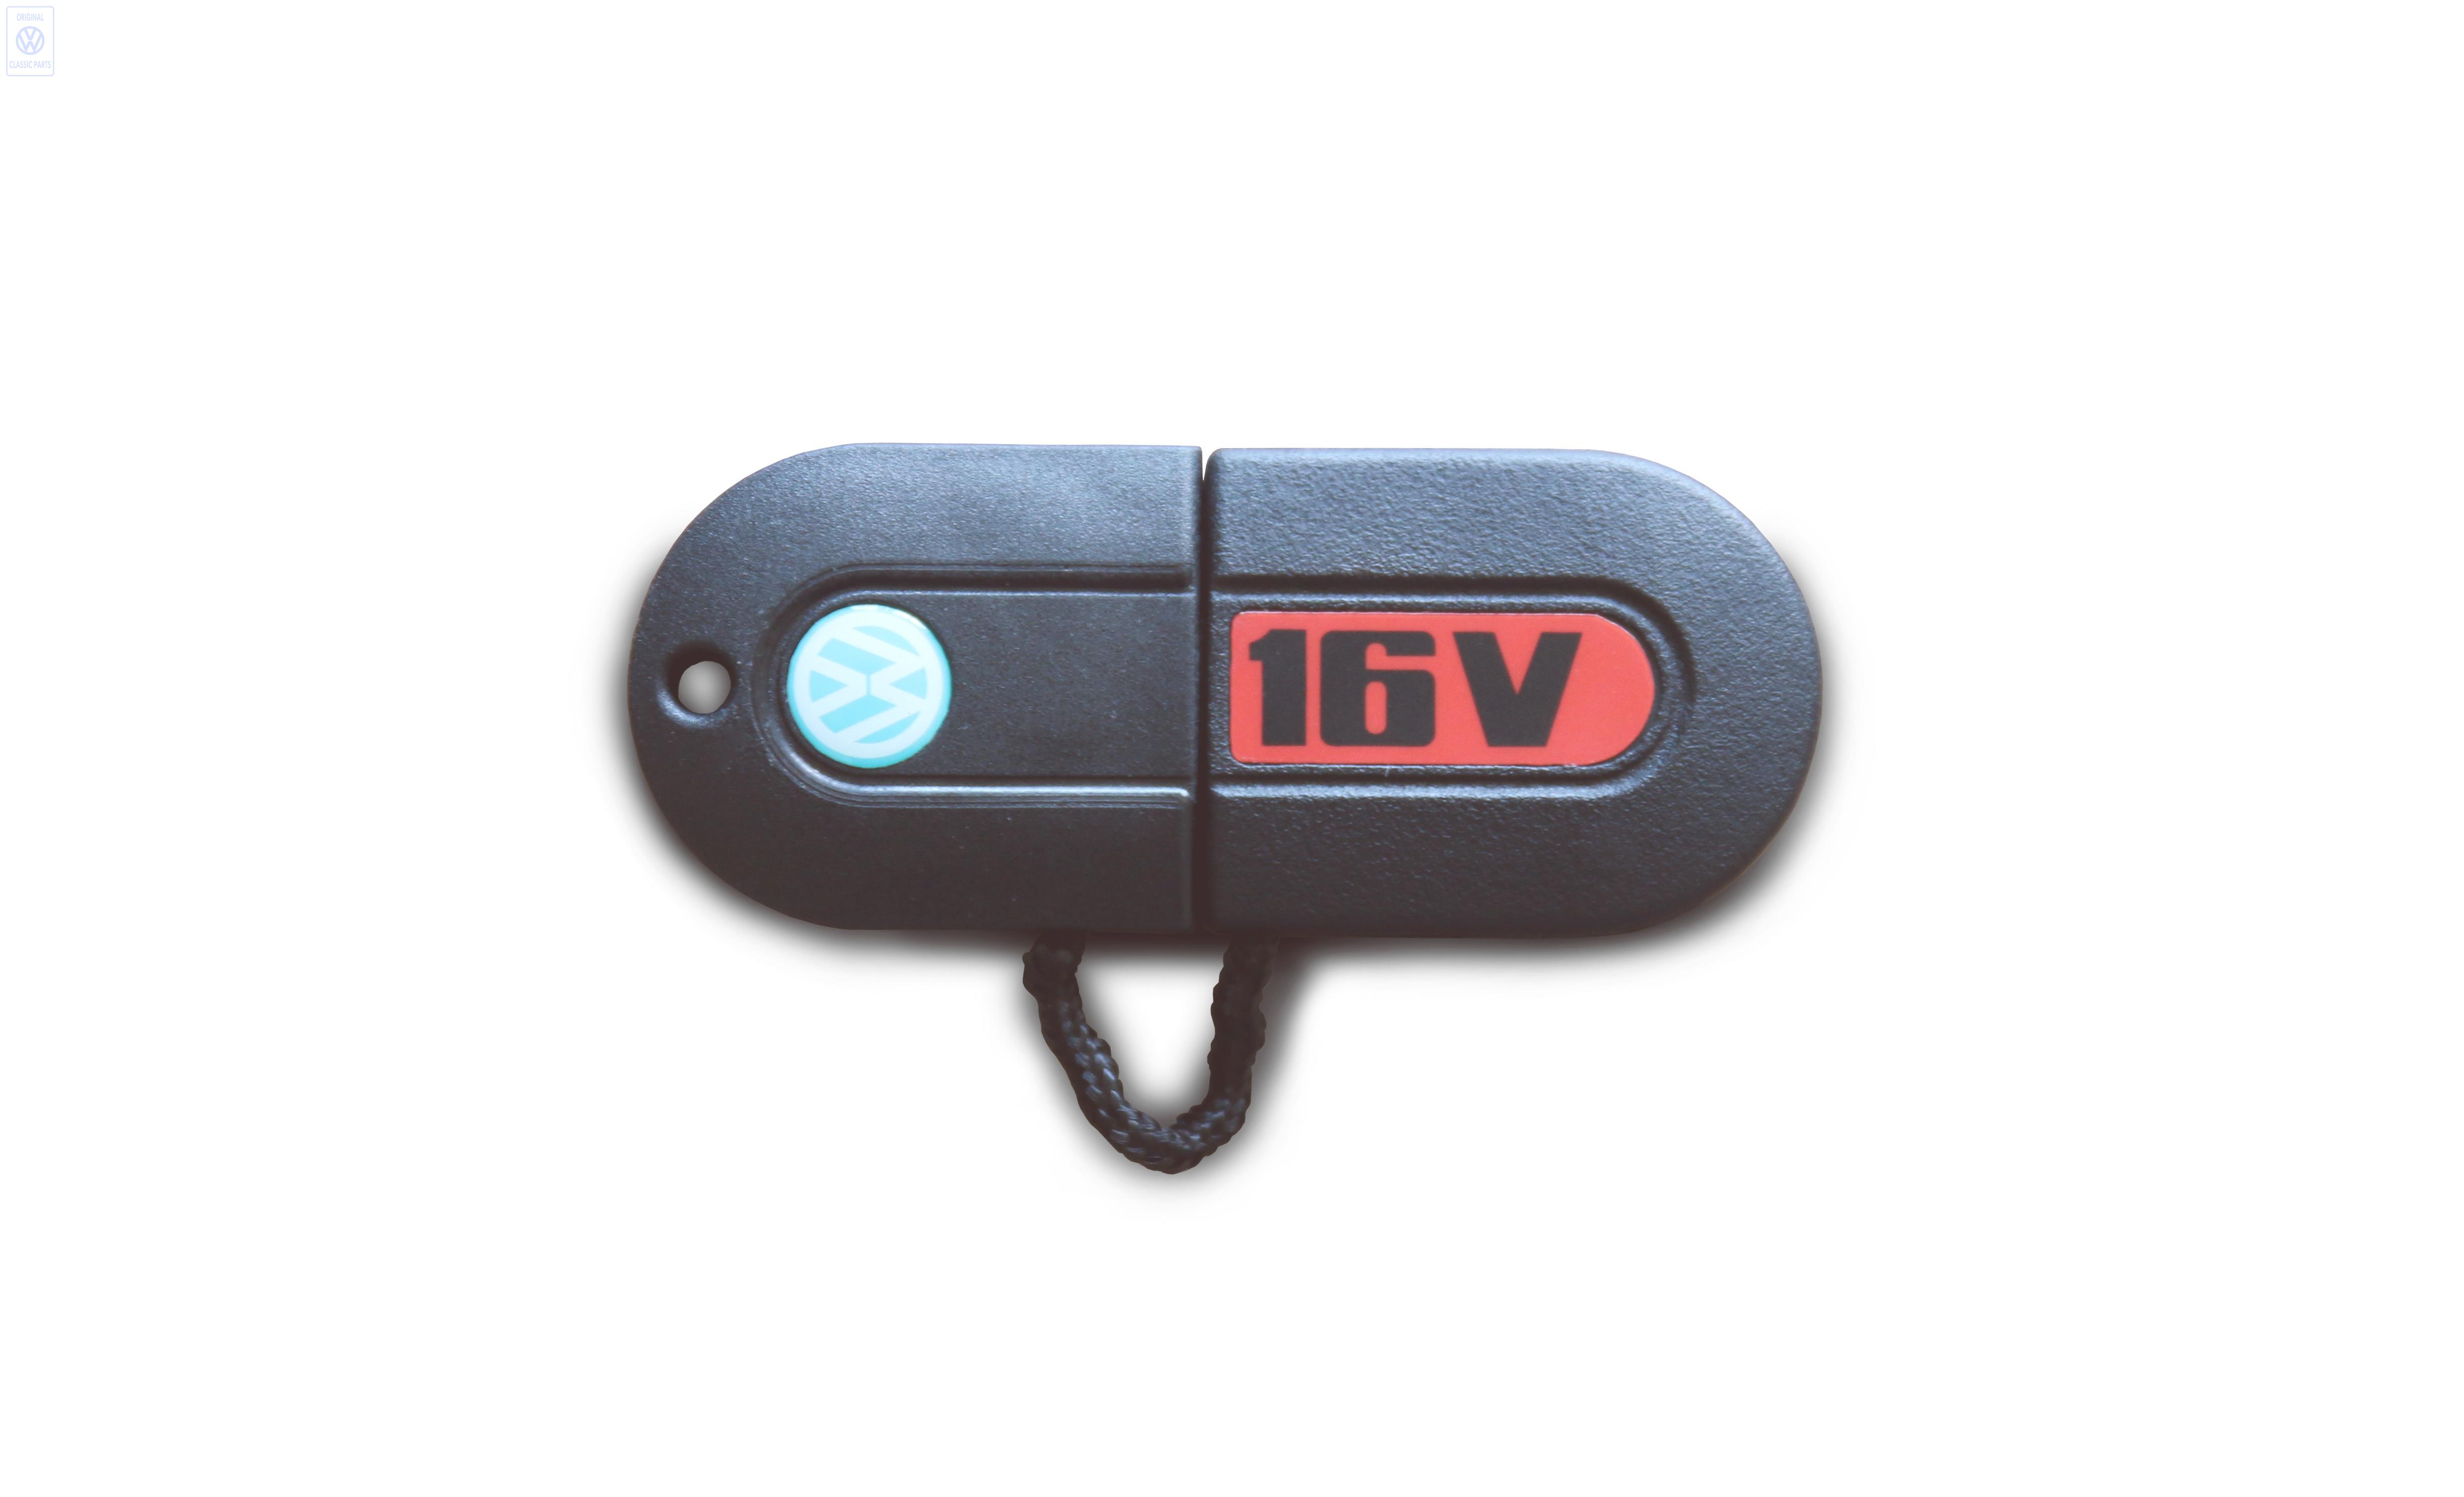 16V ignition key for VW Golf Mk2 and Scirocco Mk2